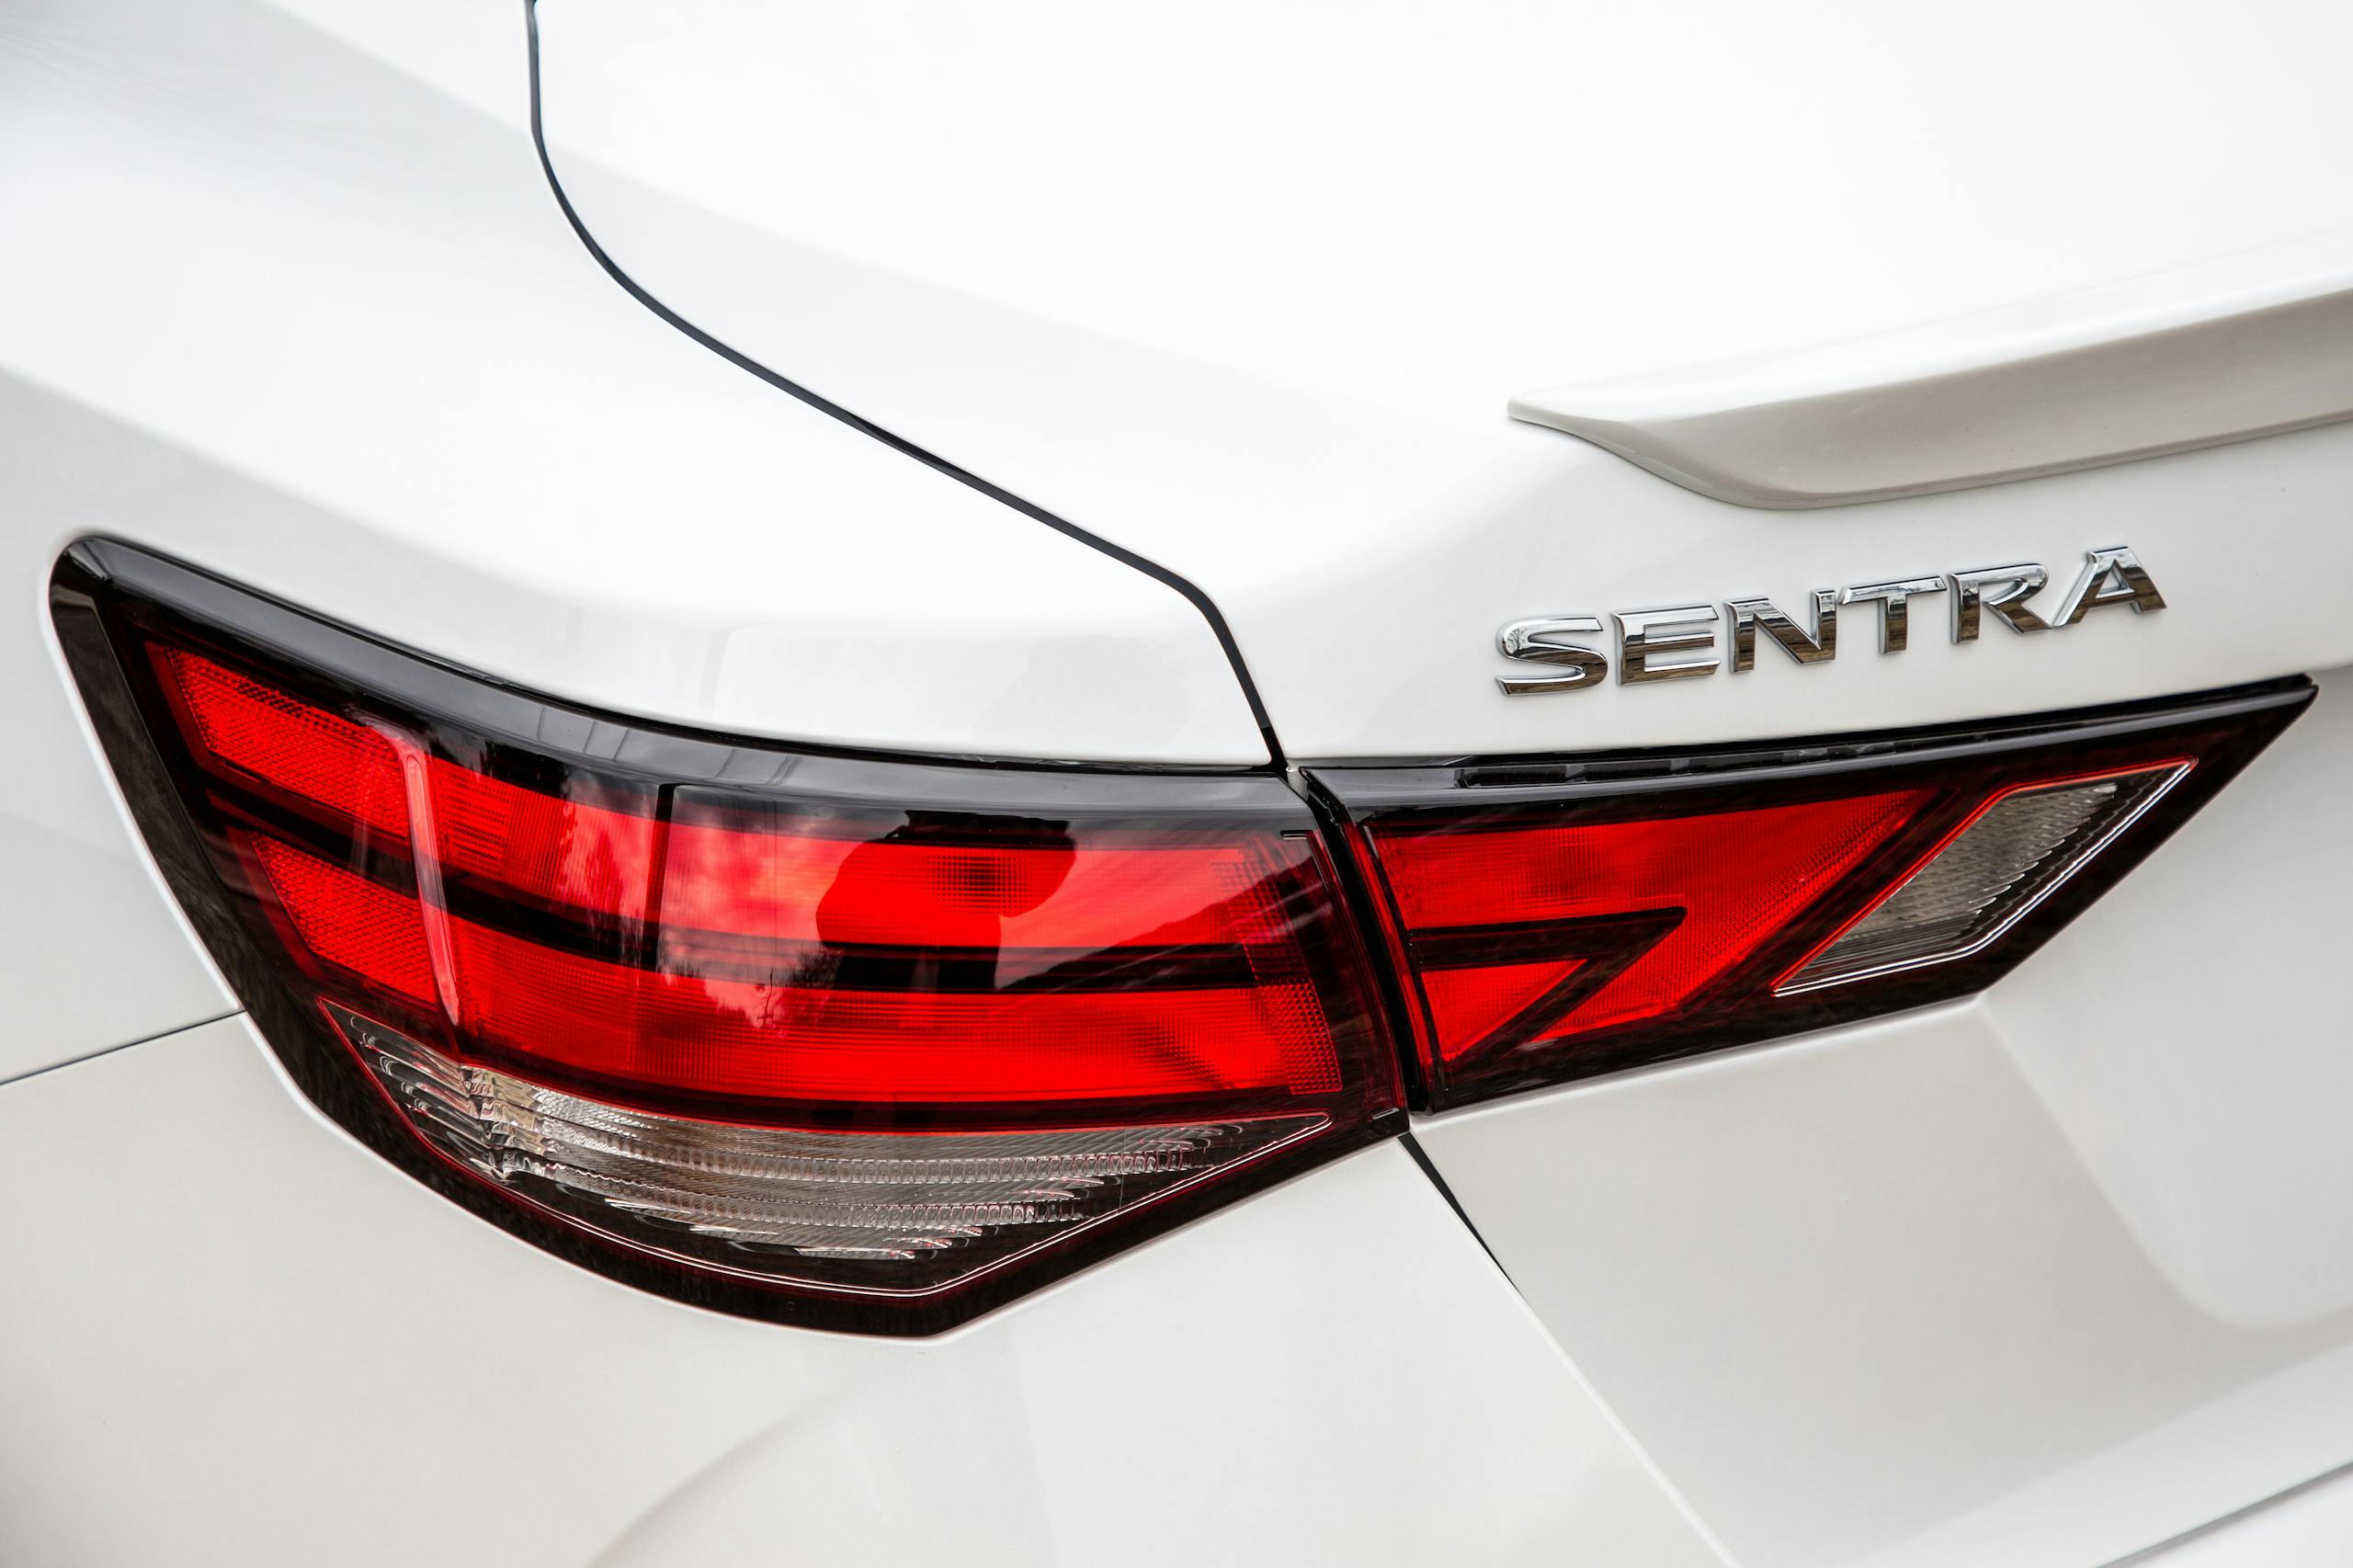 2022 Nissan Sentra SR taillight closeup